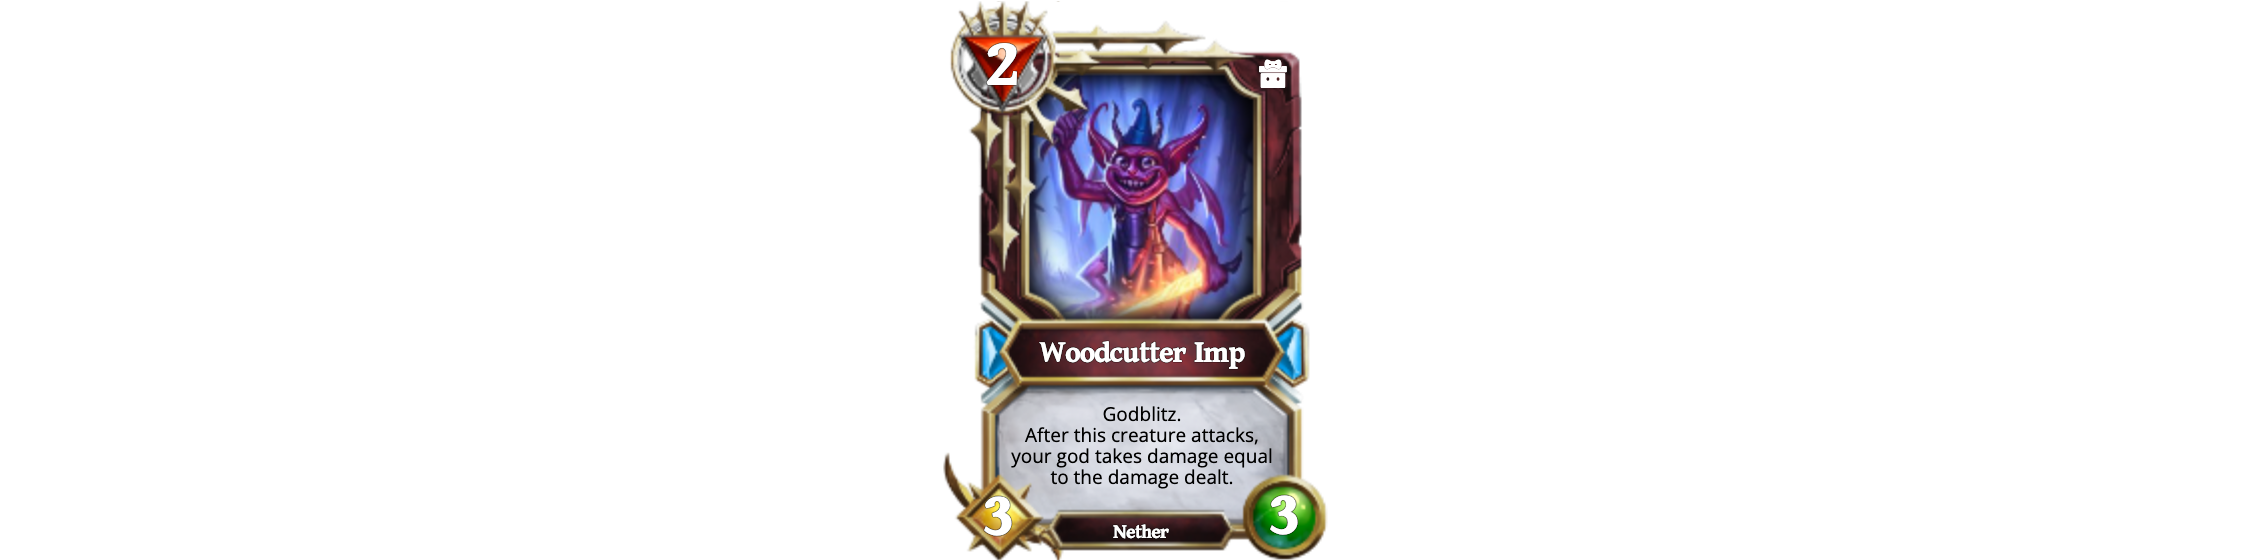 woodcutter-imp